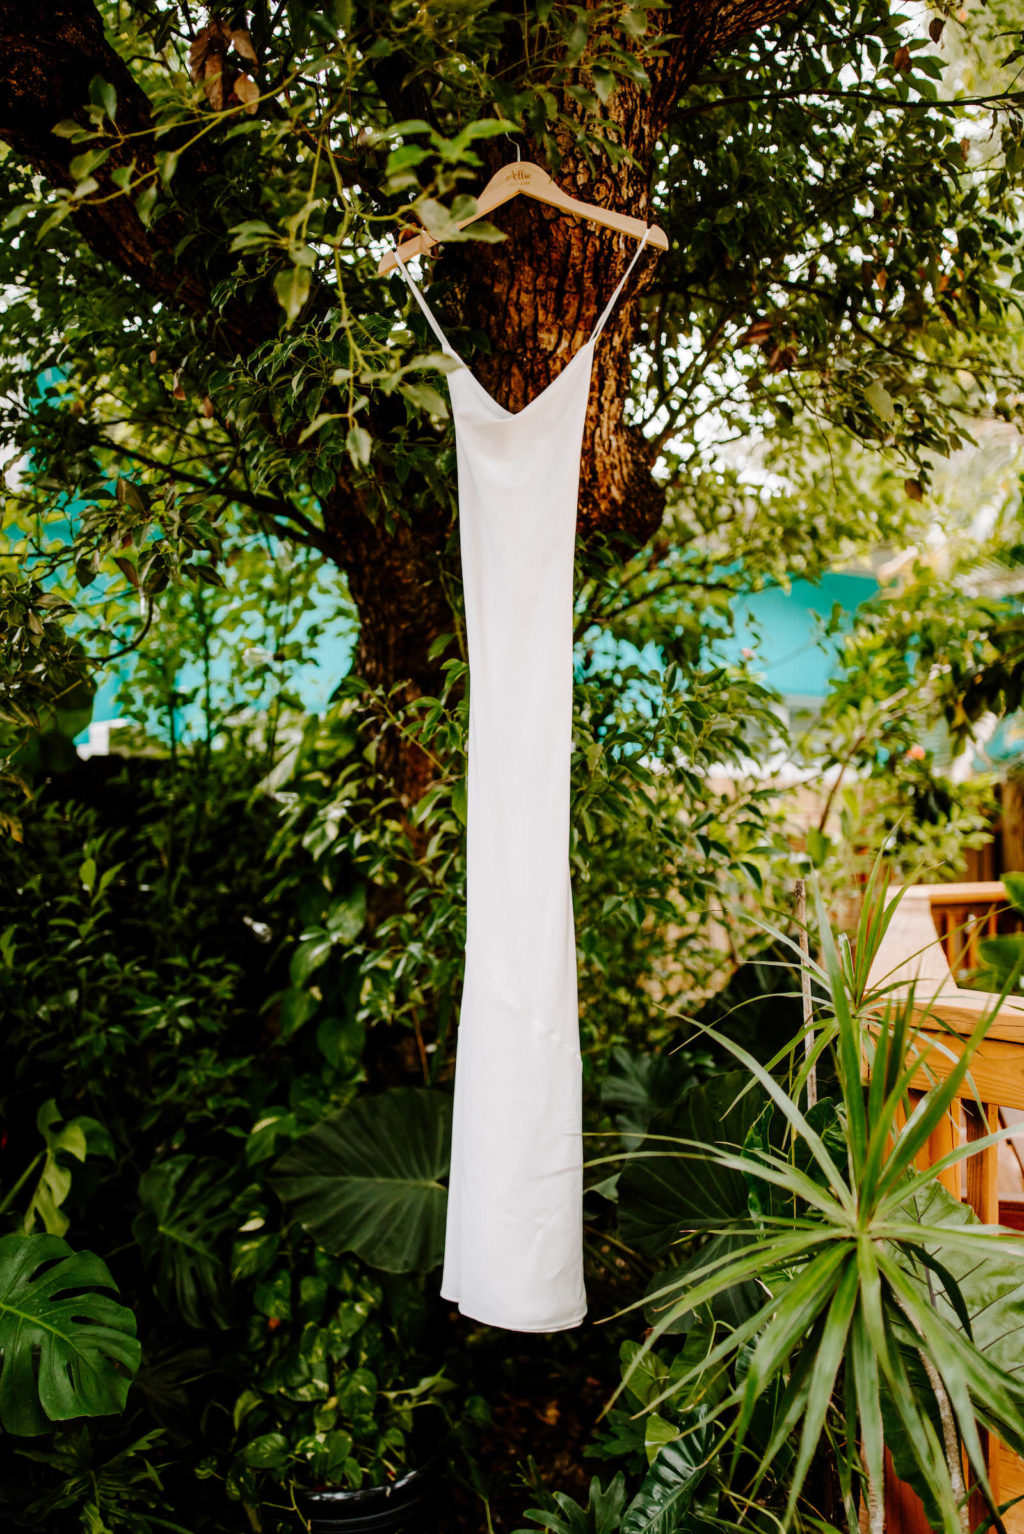 Tampa Bay Bridal Details, Florida Backyard with Show Me Your Mumu White Wedding Dress Hanging in Jungle